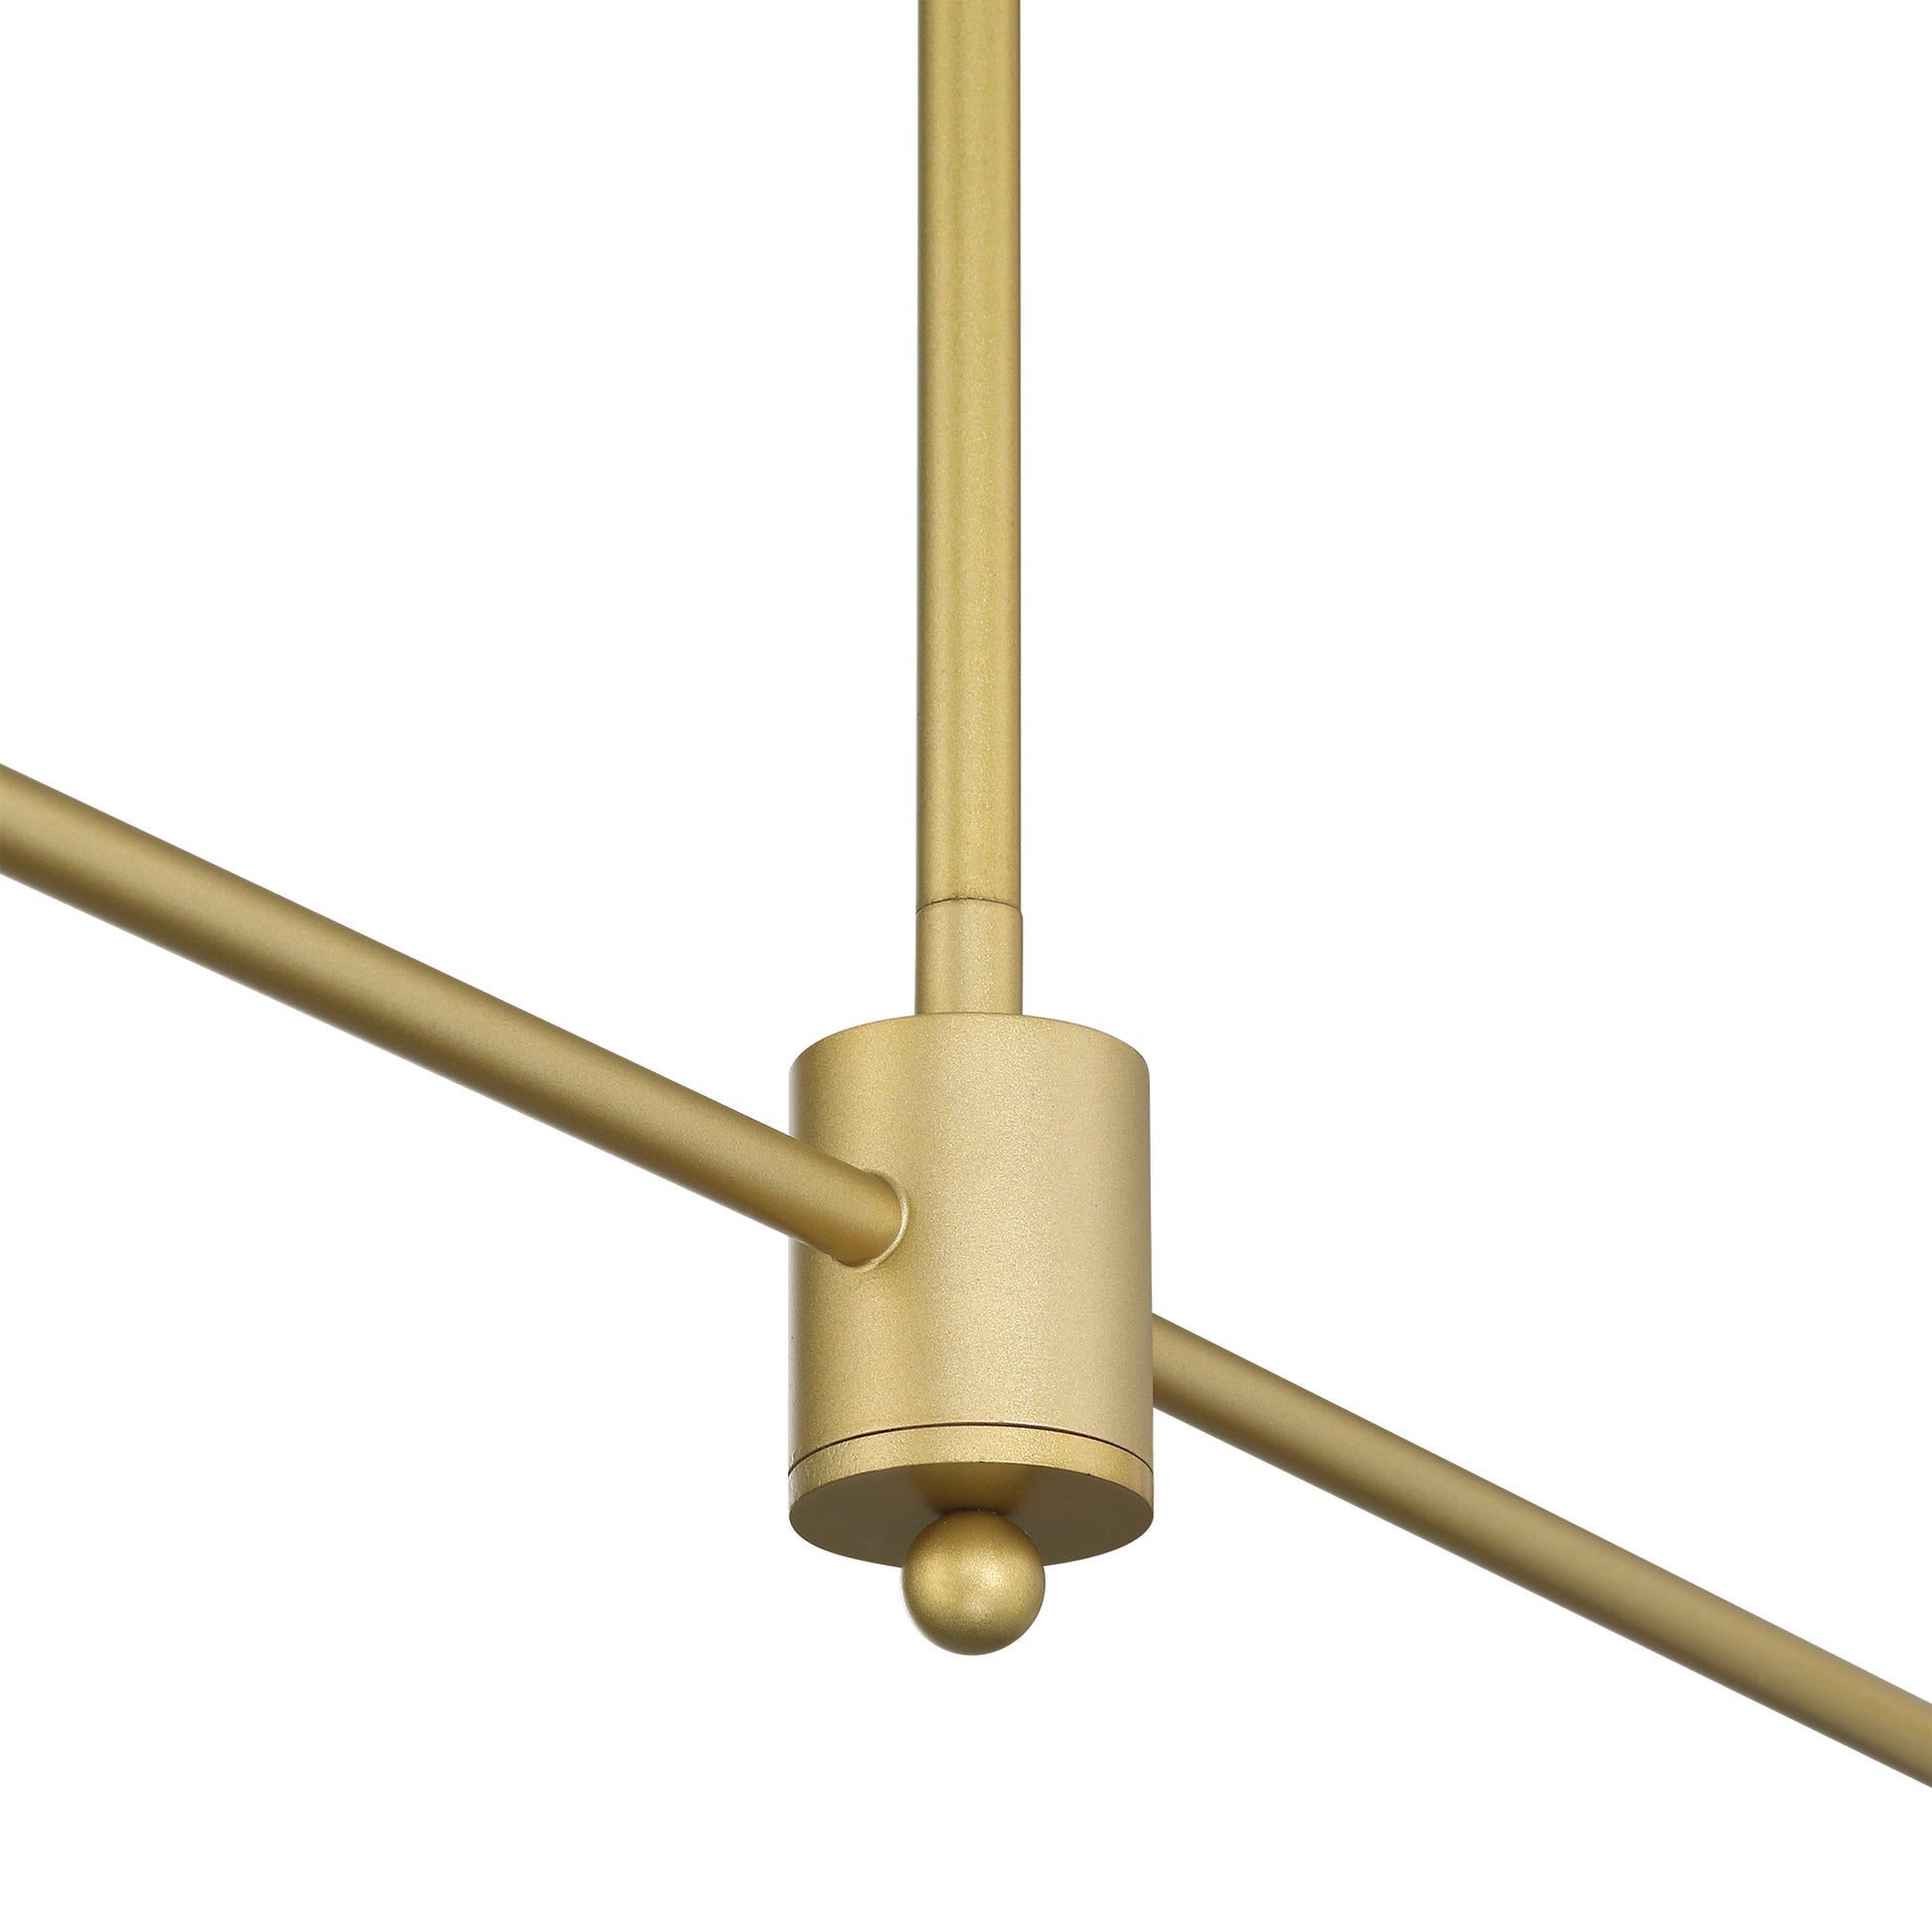 4 light modern linear chandelier (8) by ACROMA